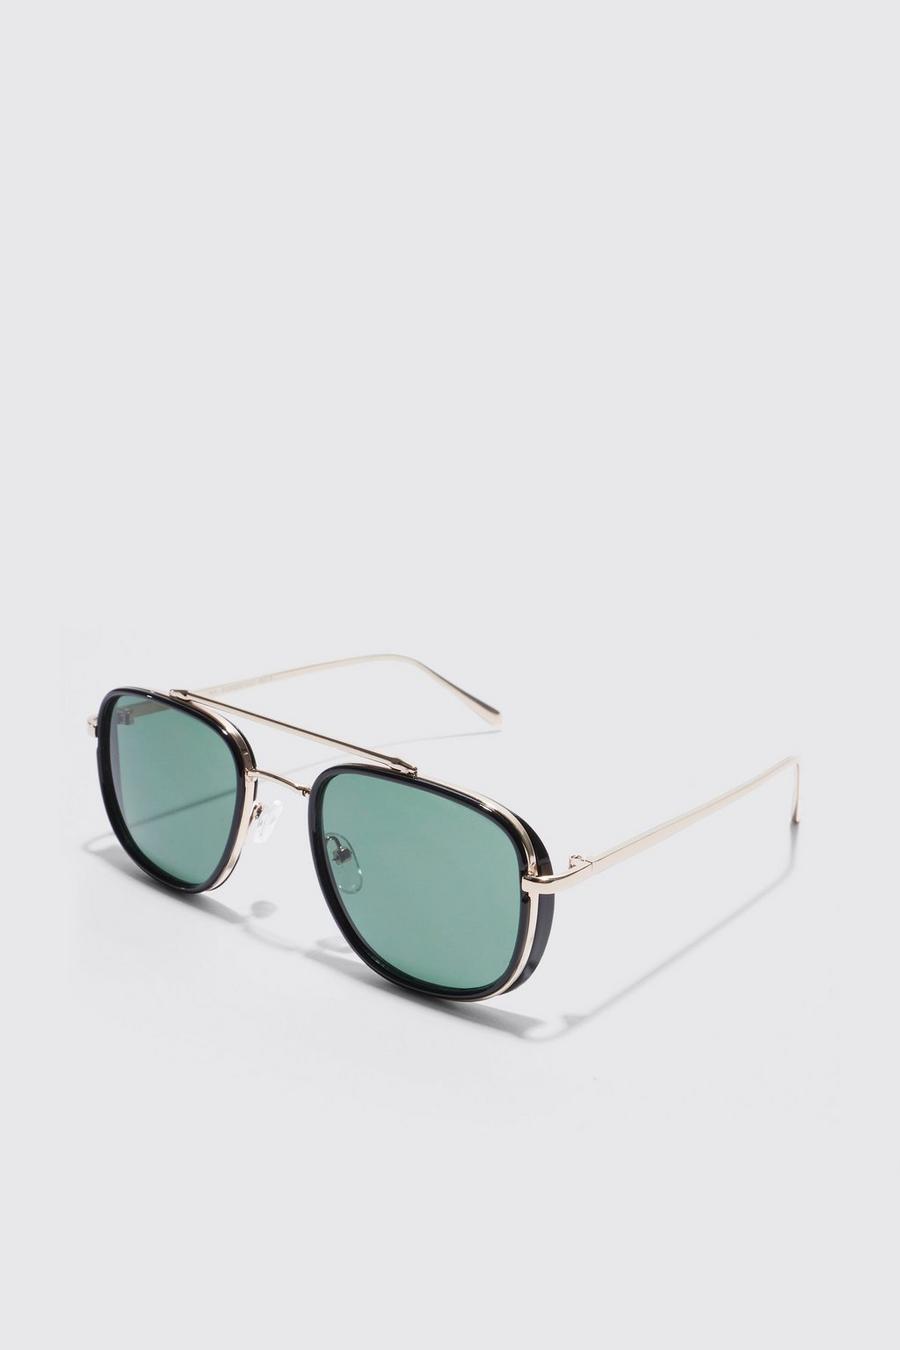 Gold rick owens straight top sunglasses item